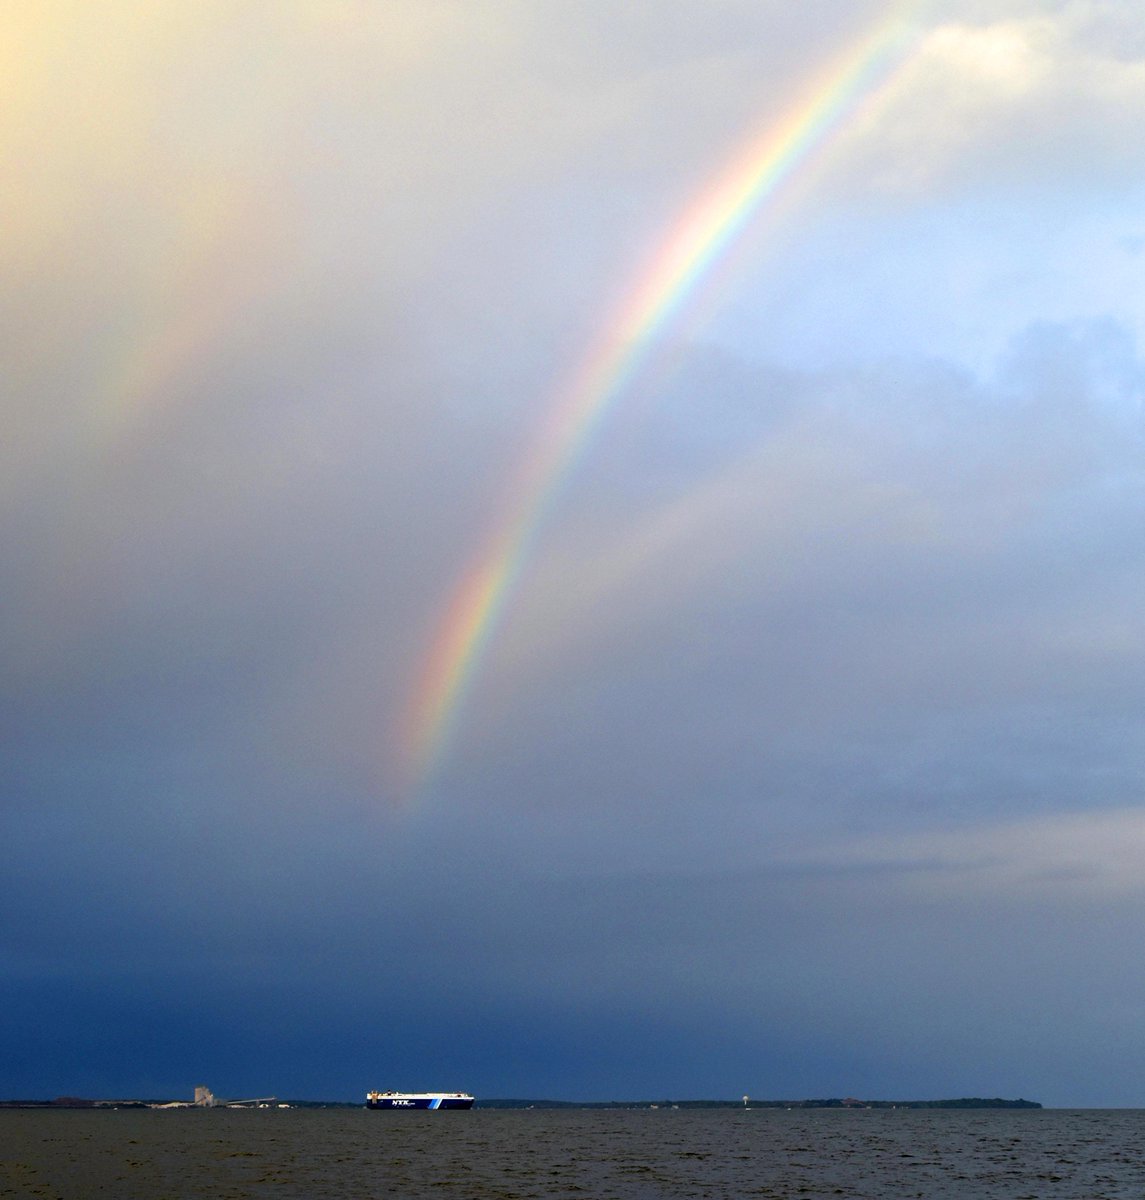 Tonight's #rainbow after the rain. #AnneArundel #PatapscoRiver #MDWx @capitalweather @JustinWeather